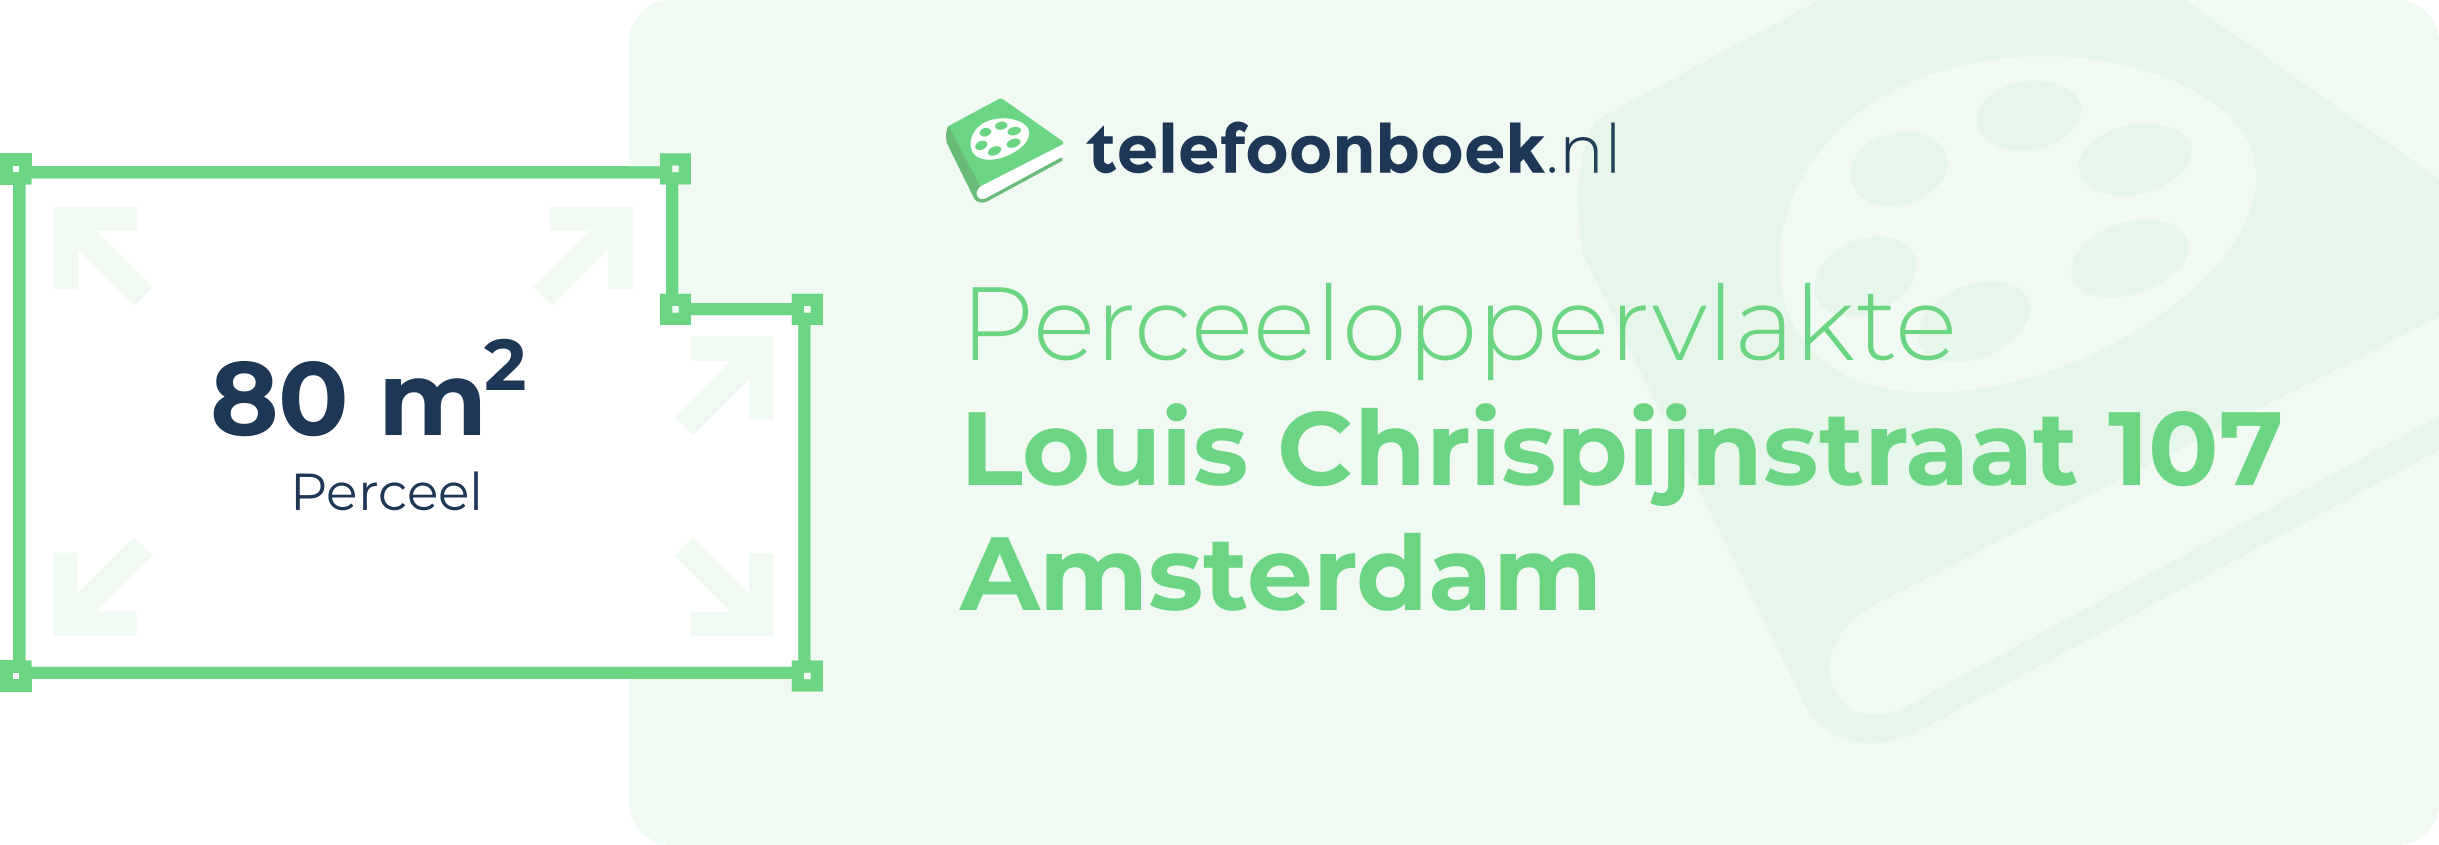 Perceeloppervlakte Louis Chrispijnstraat 107 Amsterdam